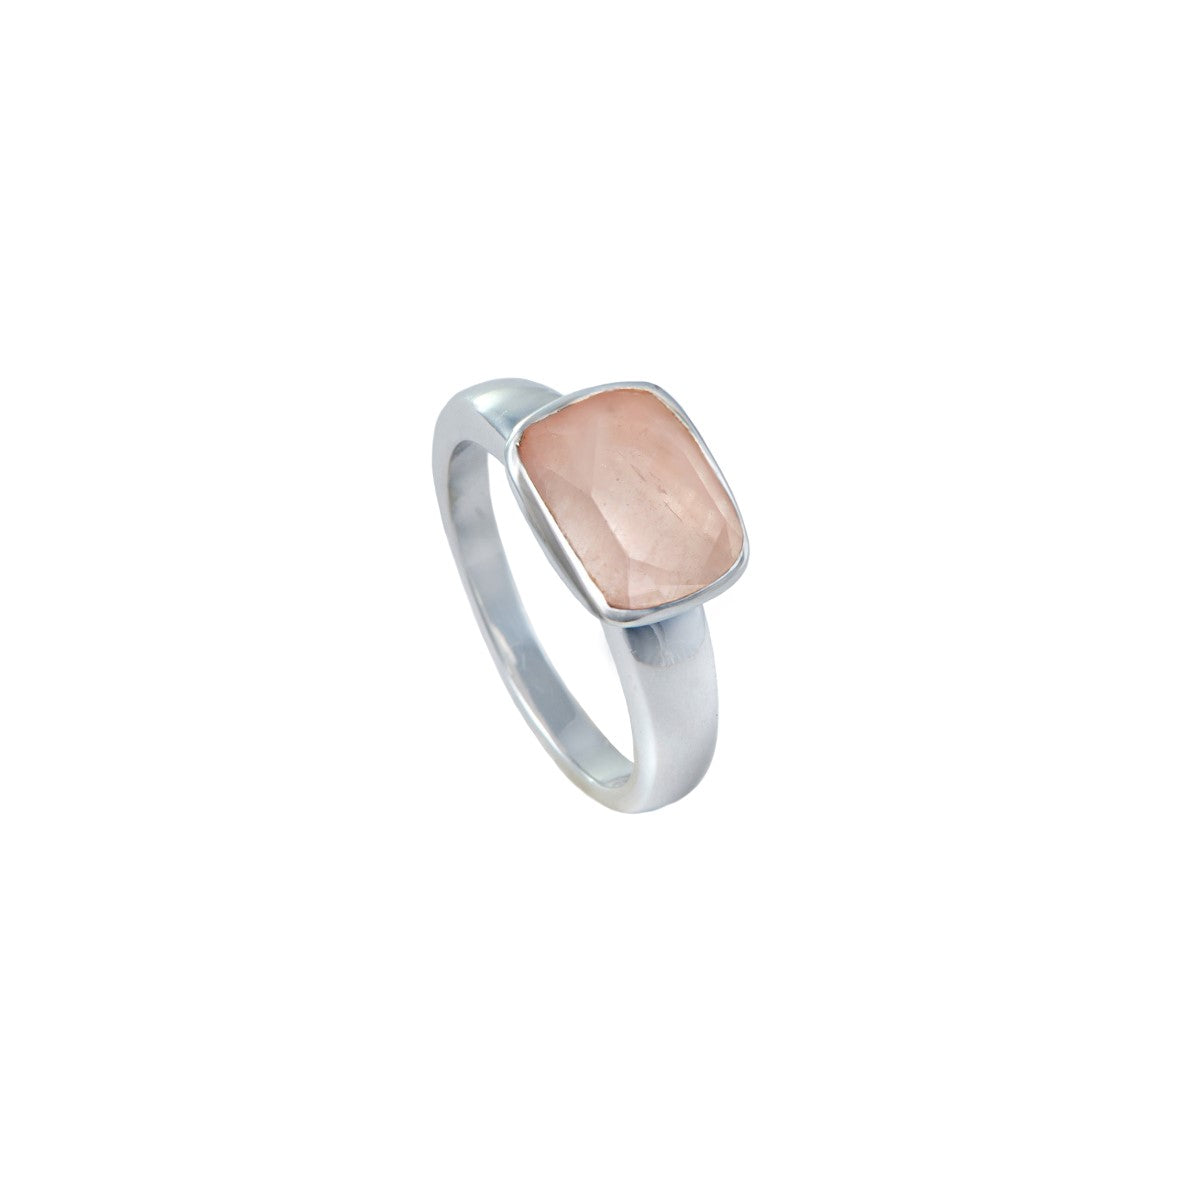 Faceted Rectangular Cut Natural Gemstone Sterling Silver Ring - Rose Quartz